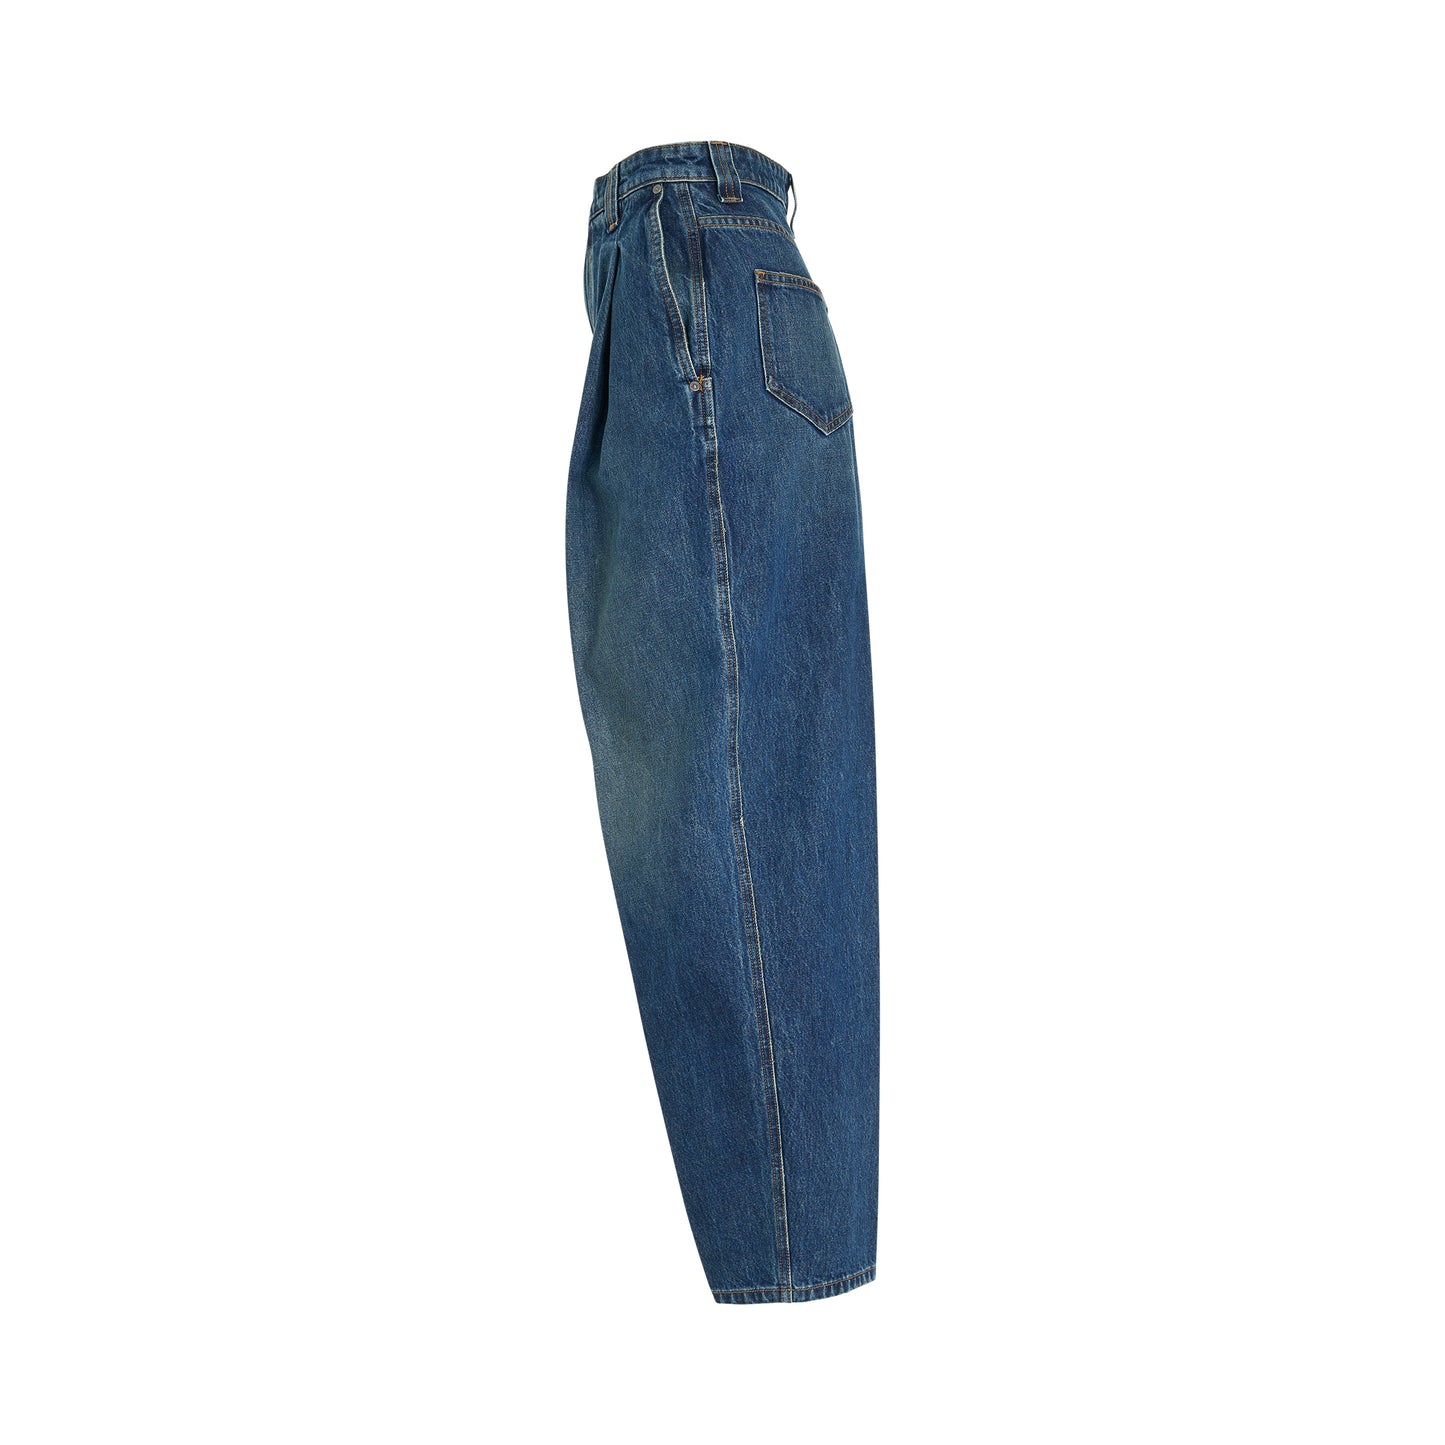 Ashford Jeans in Stinson